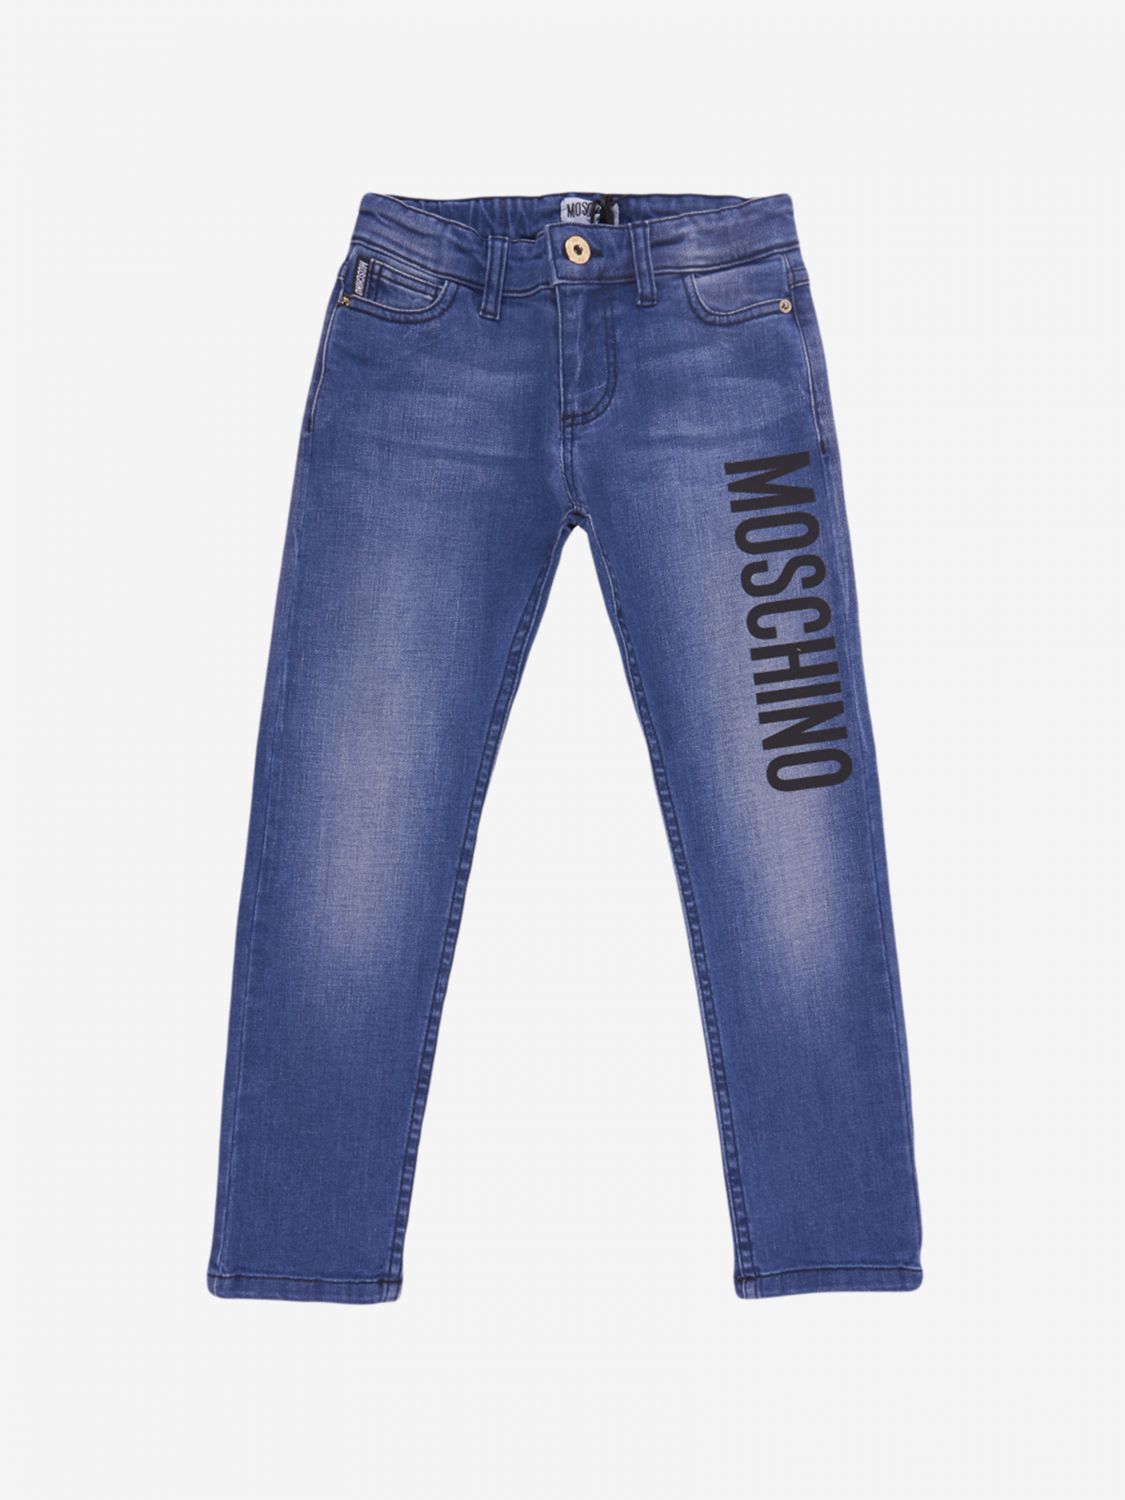 moschino logo jeans